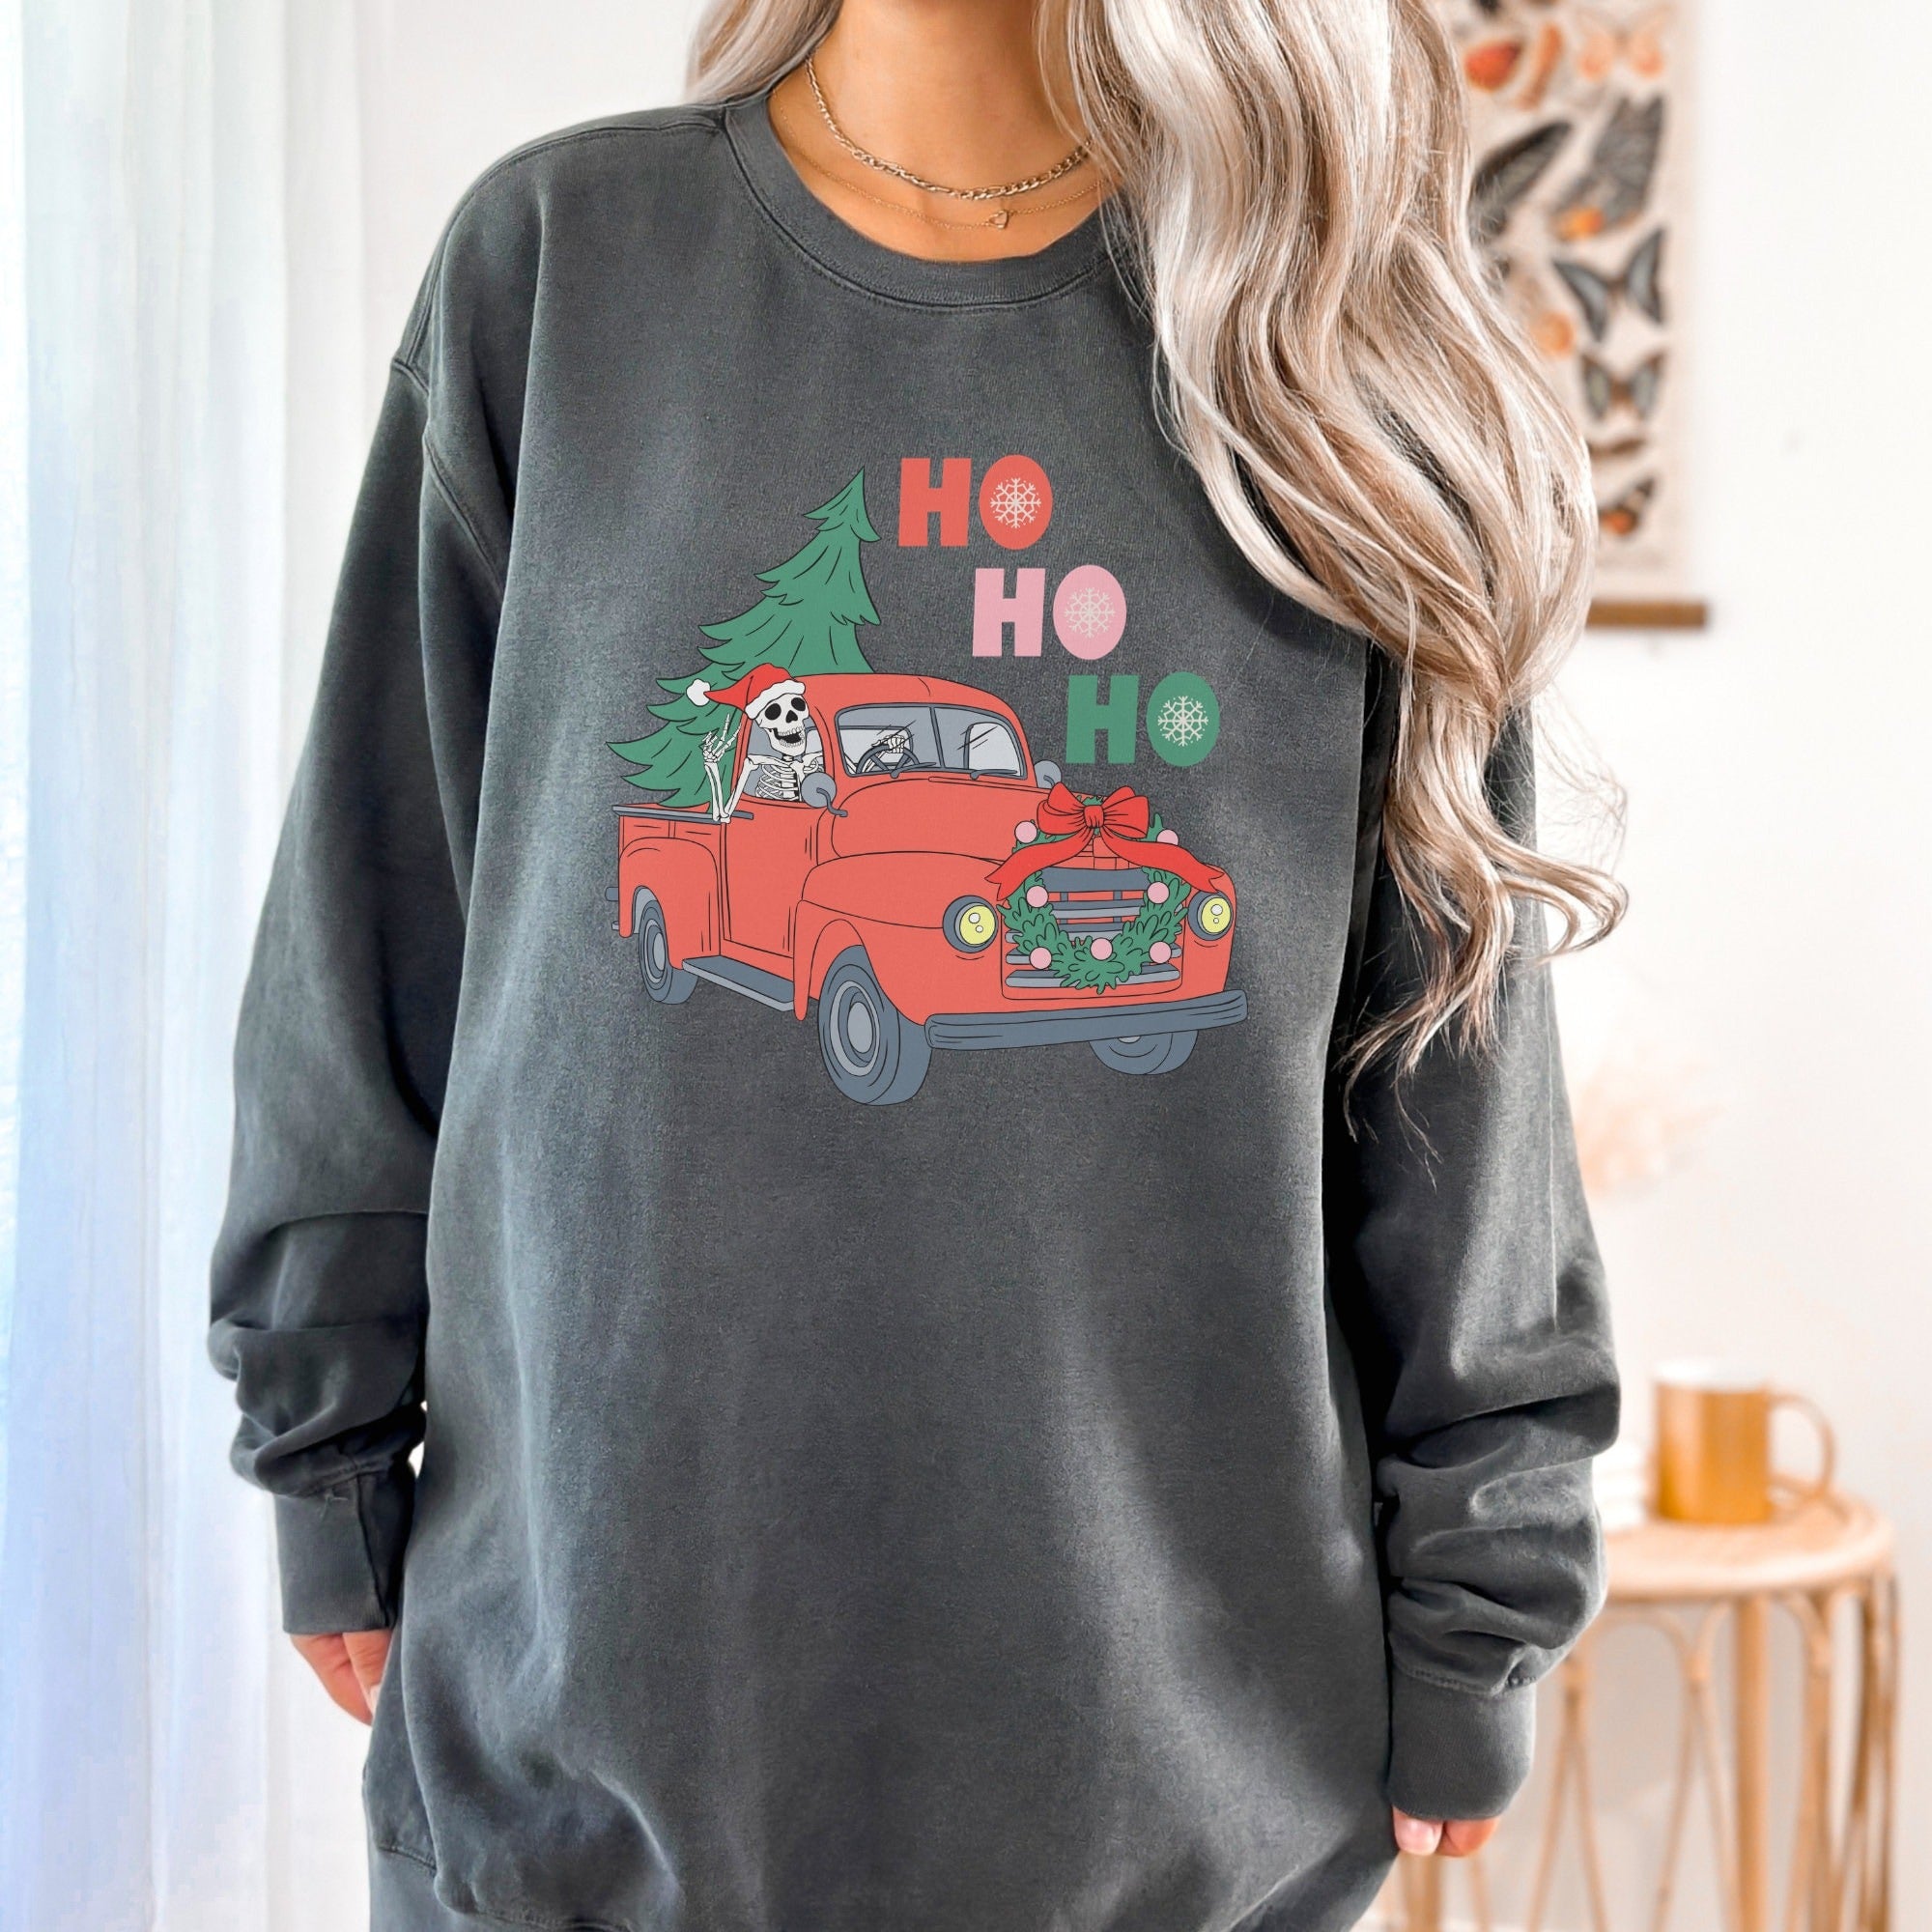 Ho Ho Ho Skeleton Christmas Sweater